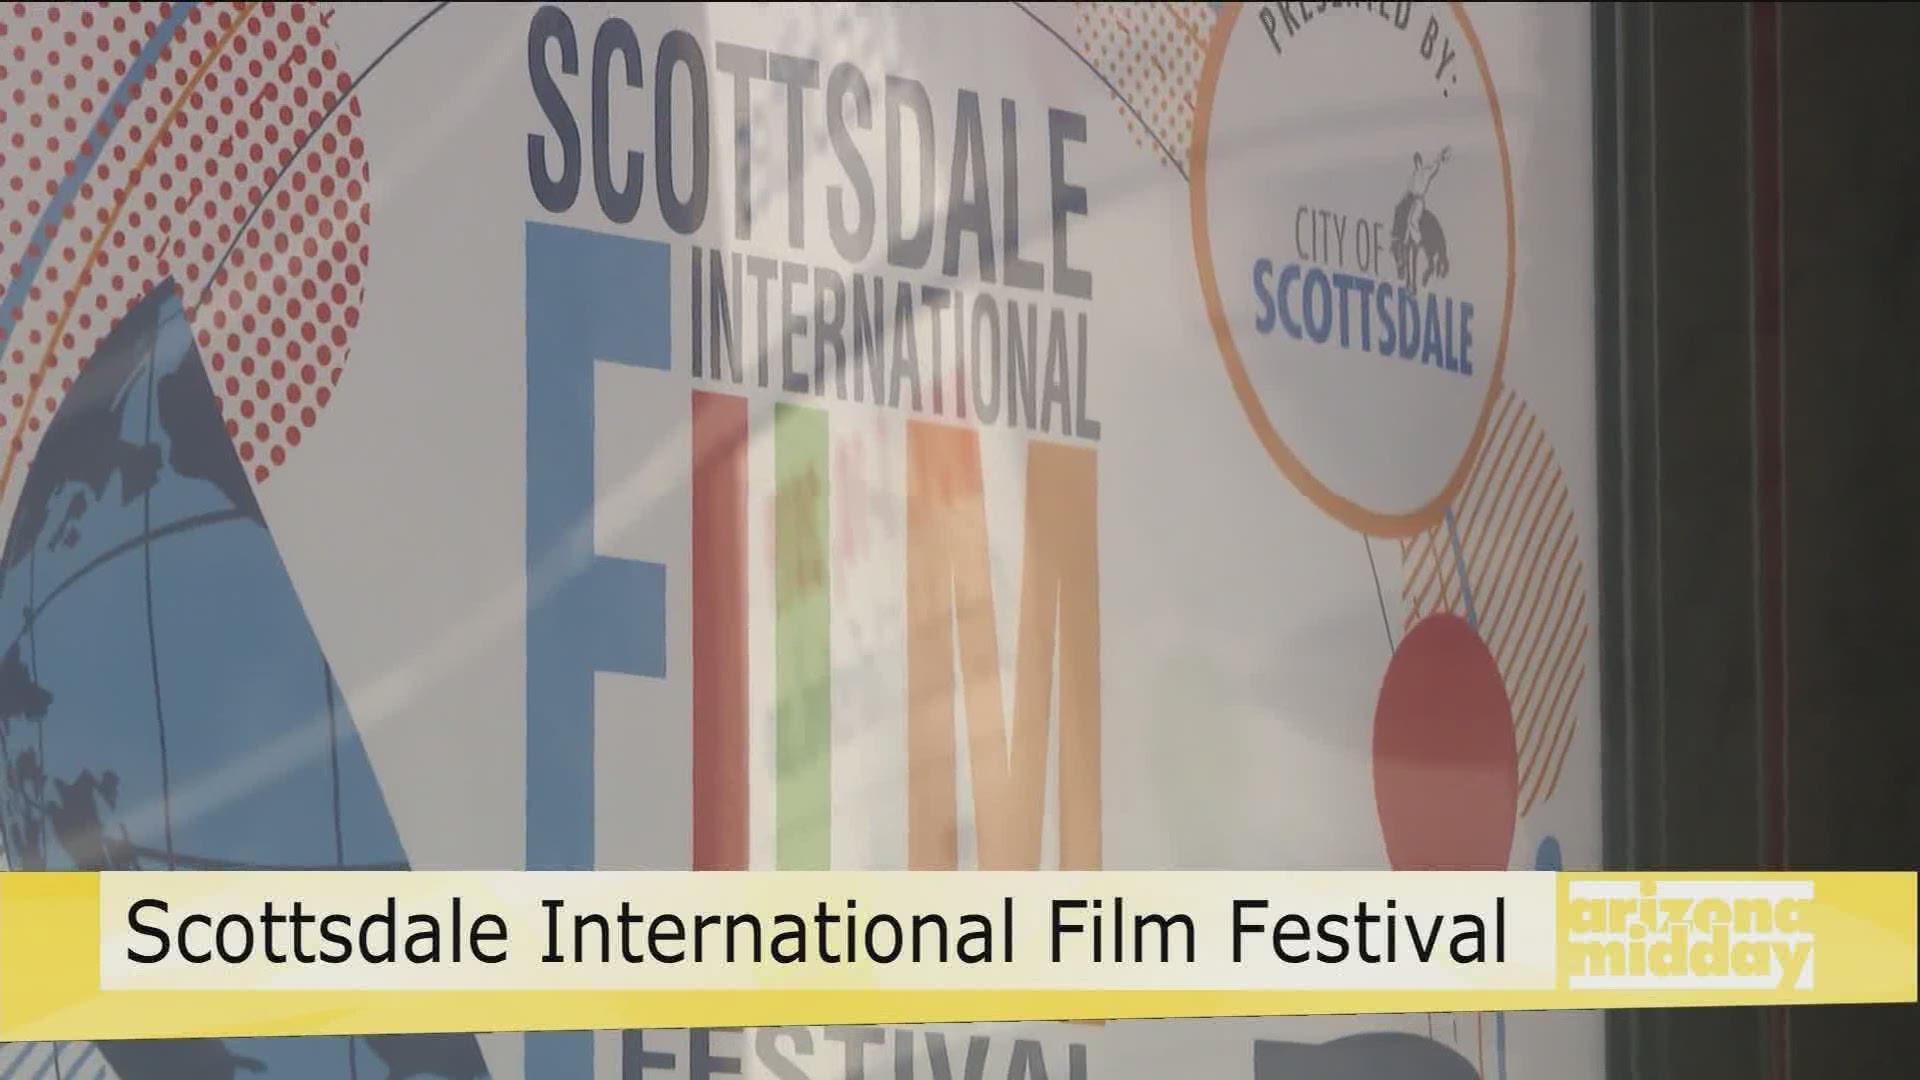 Local Film Critic, Zach Pope, walks us through his top film picks of this year's Scottsdale International Film Festival